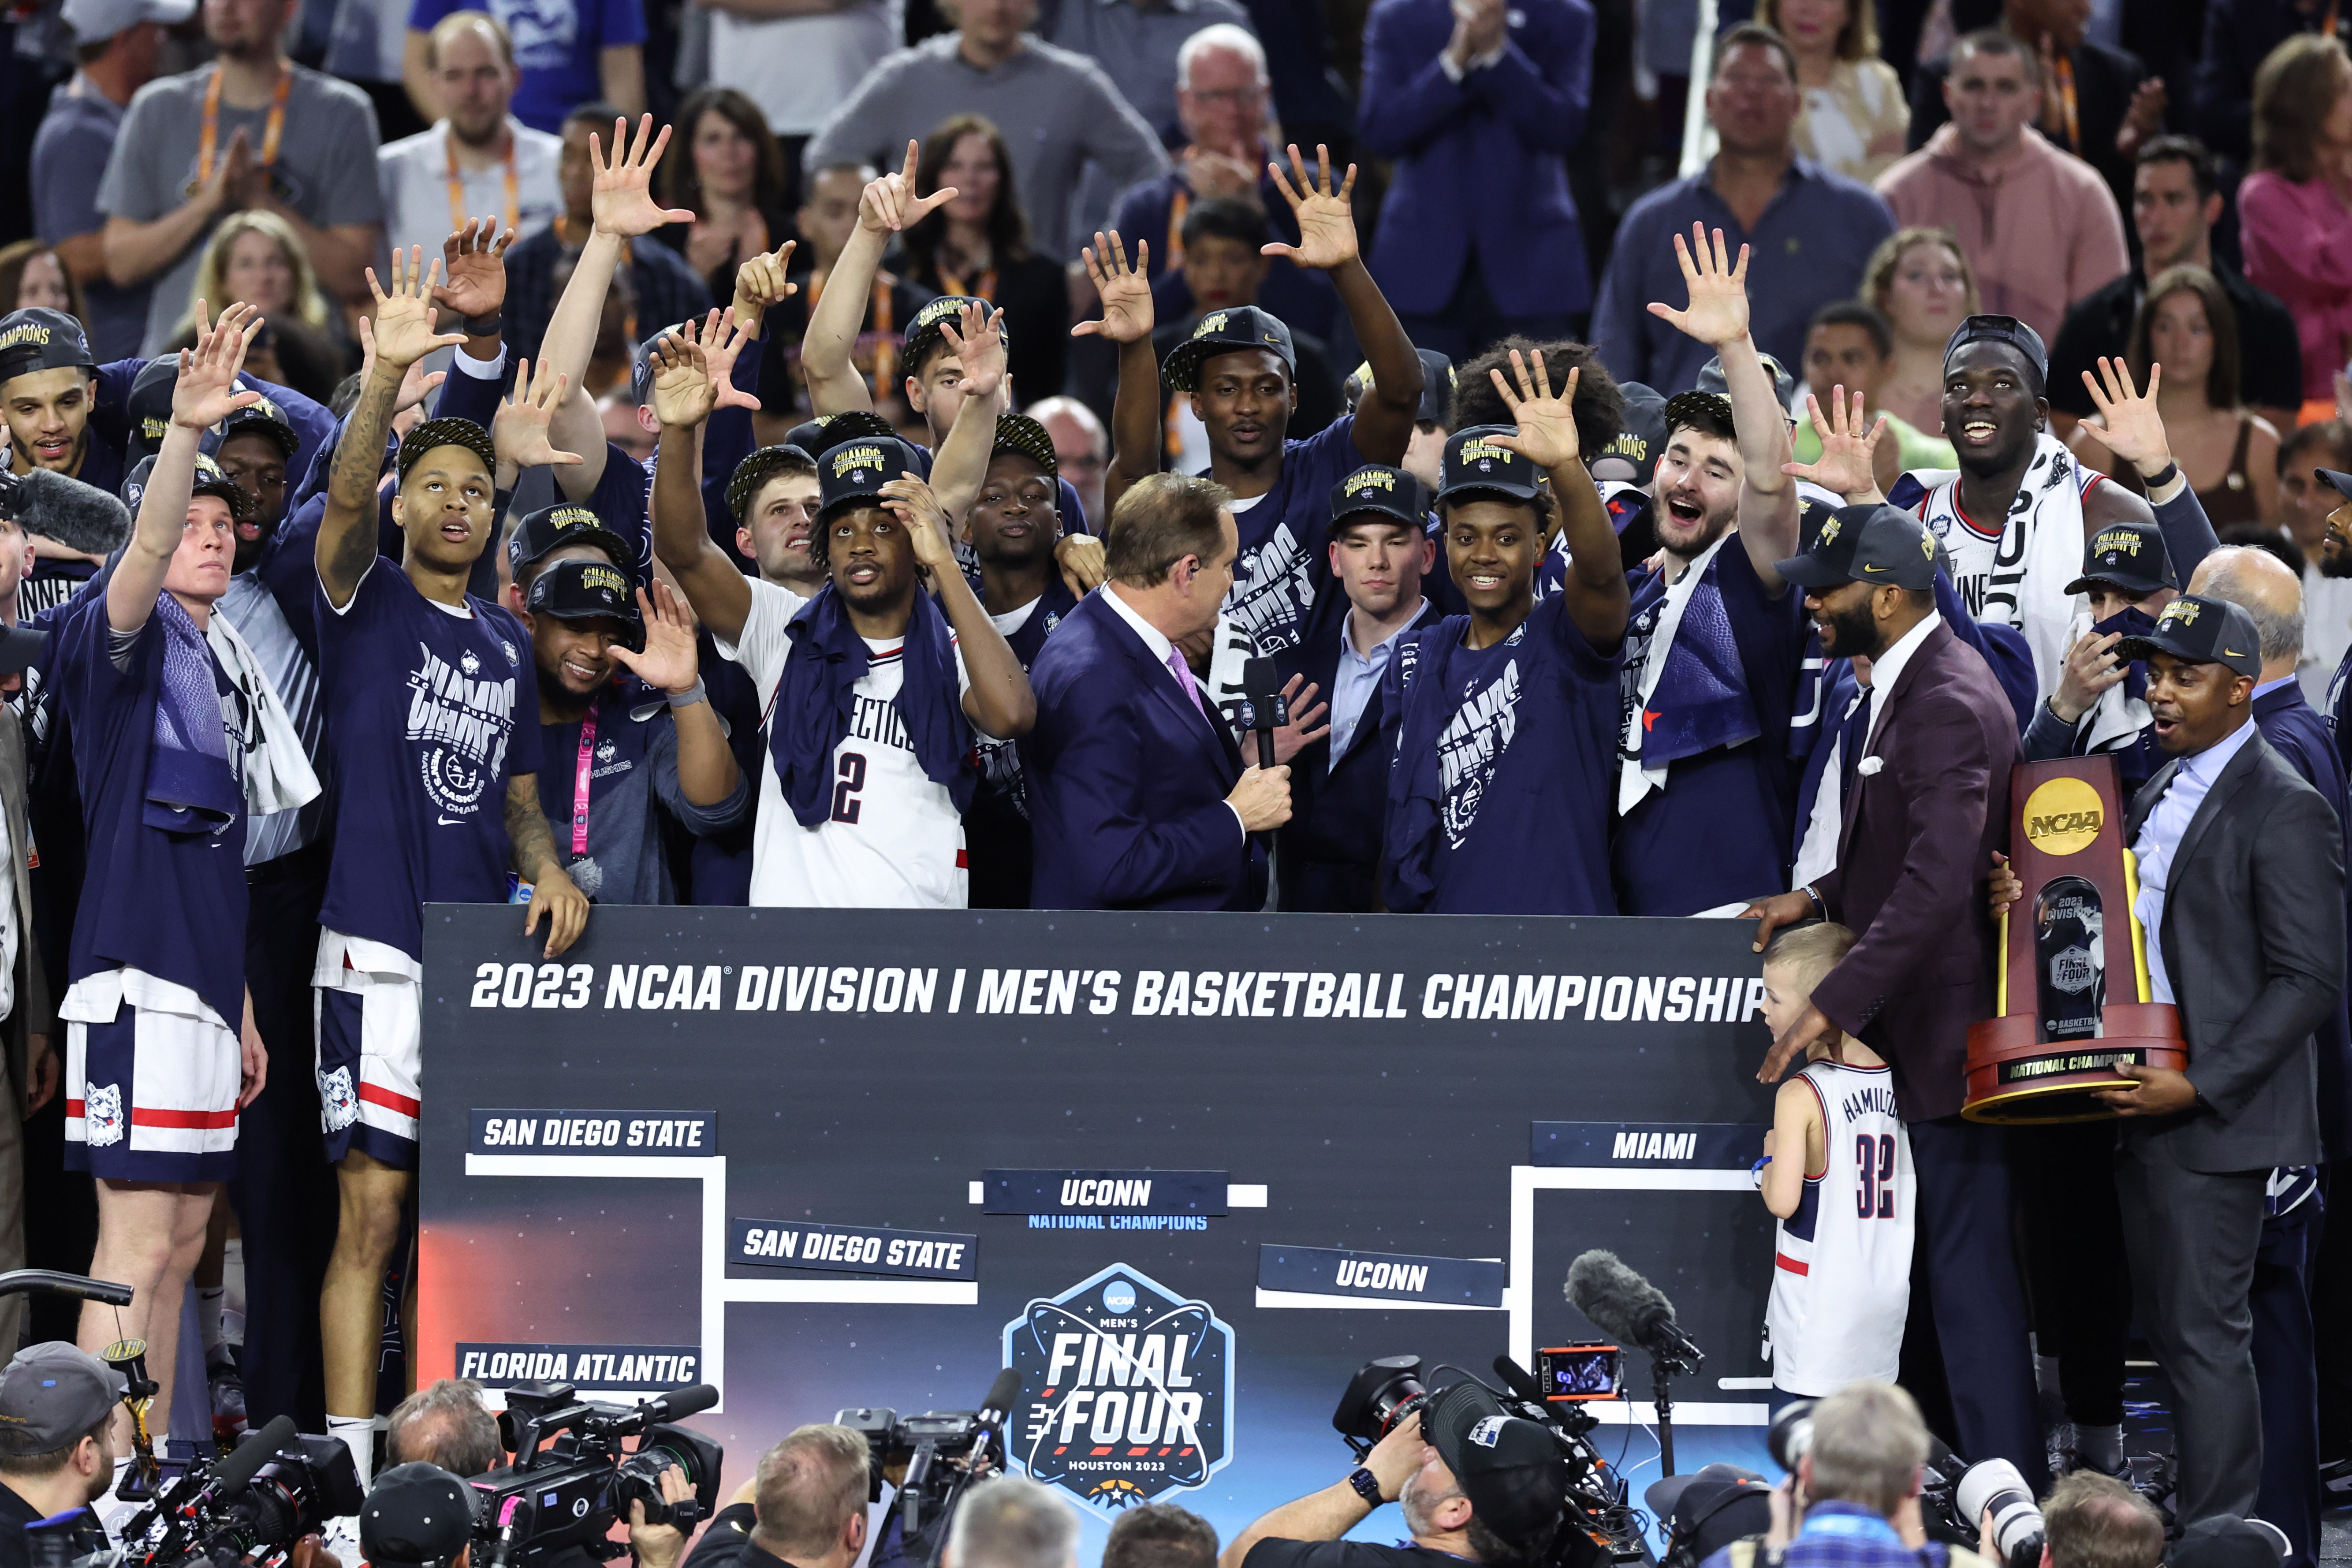 UConn defeats Miami while San Diego State stuns Florida Atlantic to advance  to the NCAA Men's Basketball Championship tournament title game